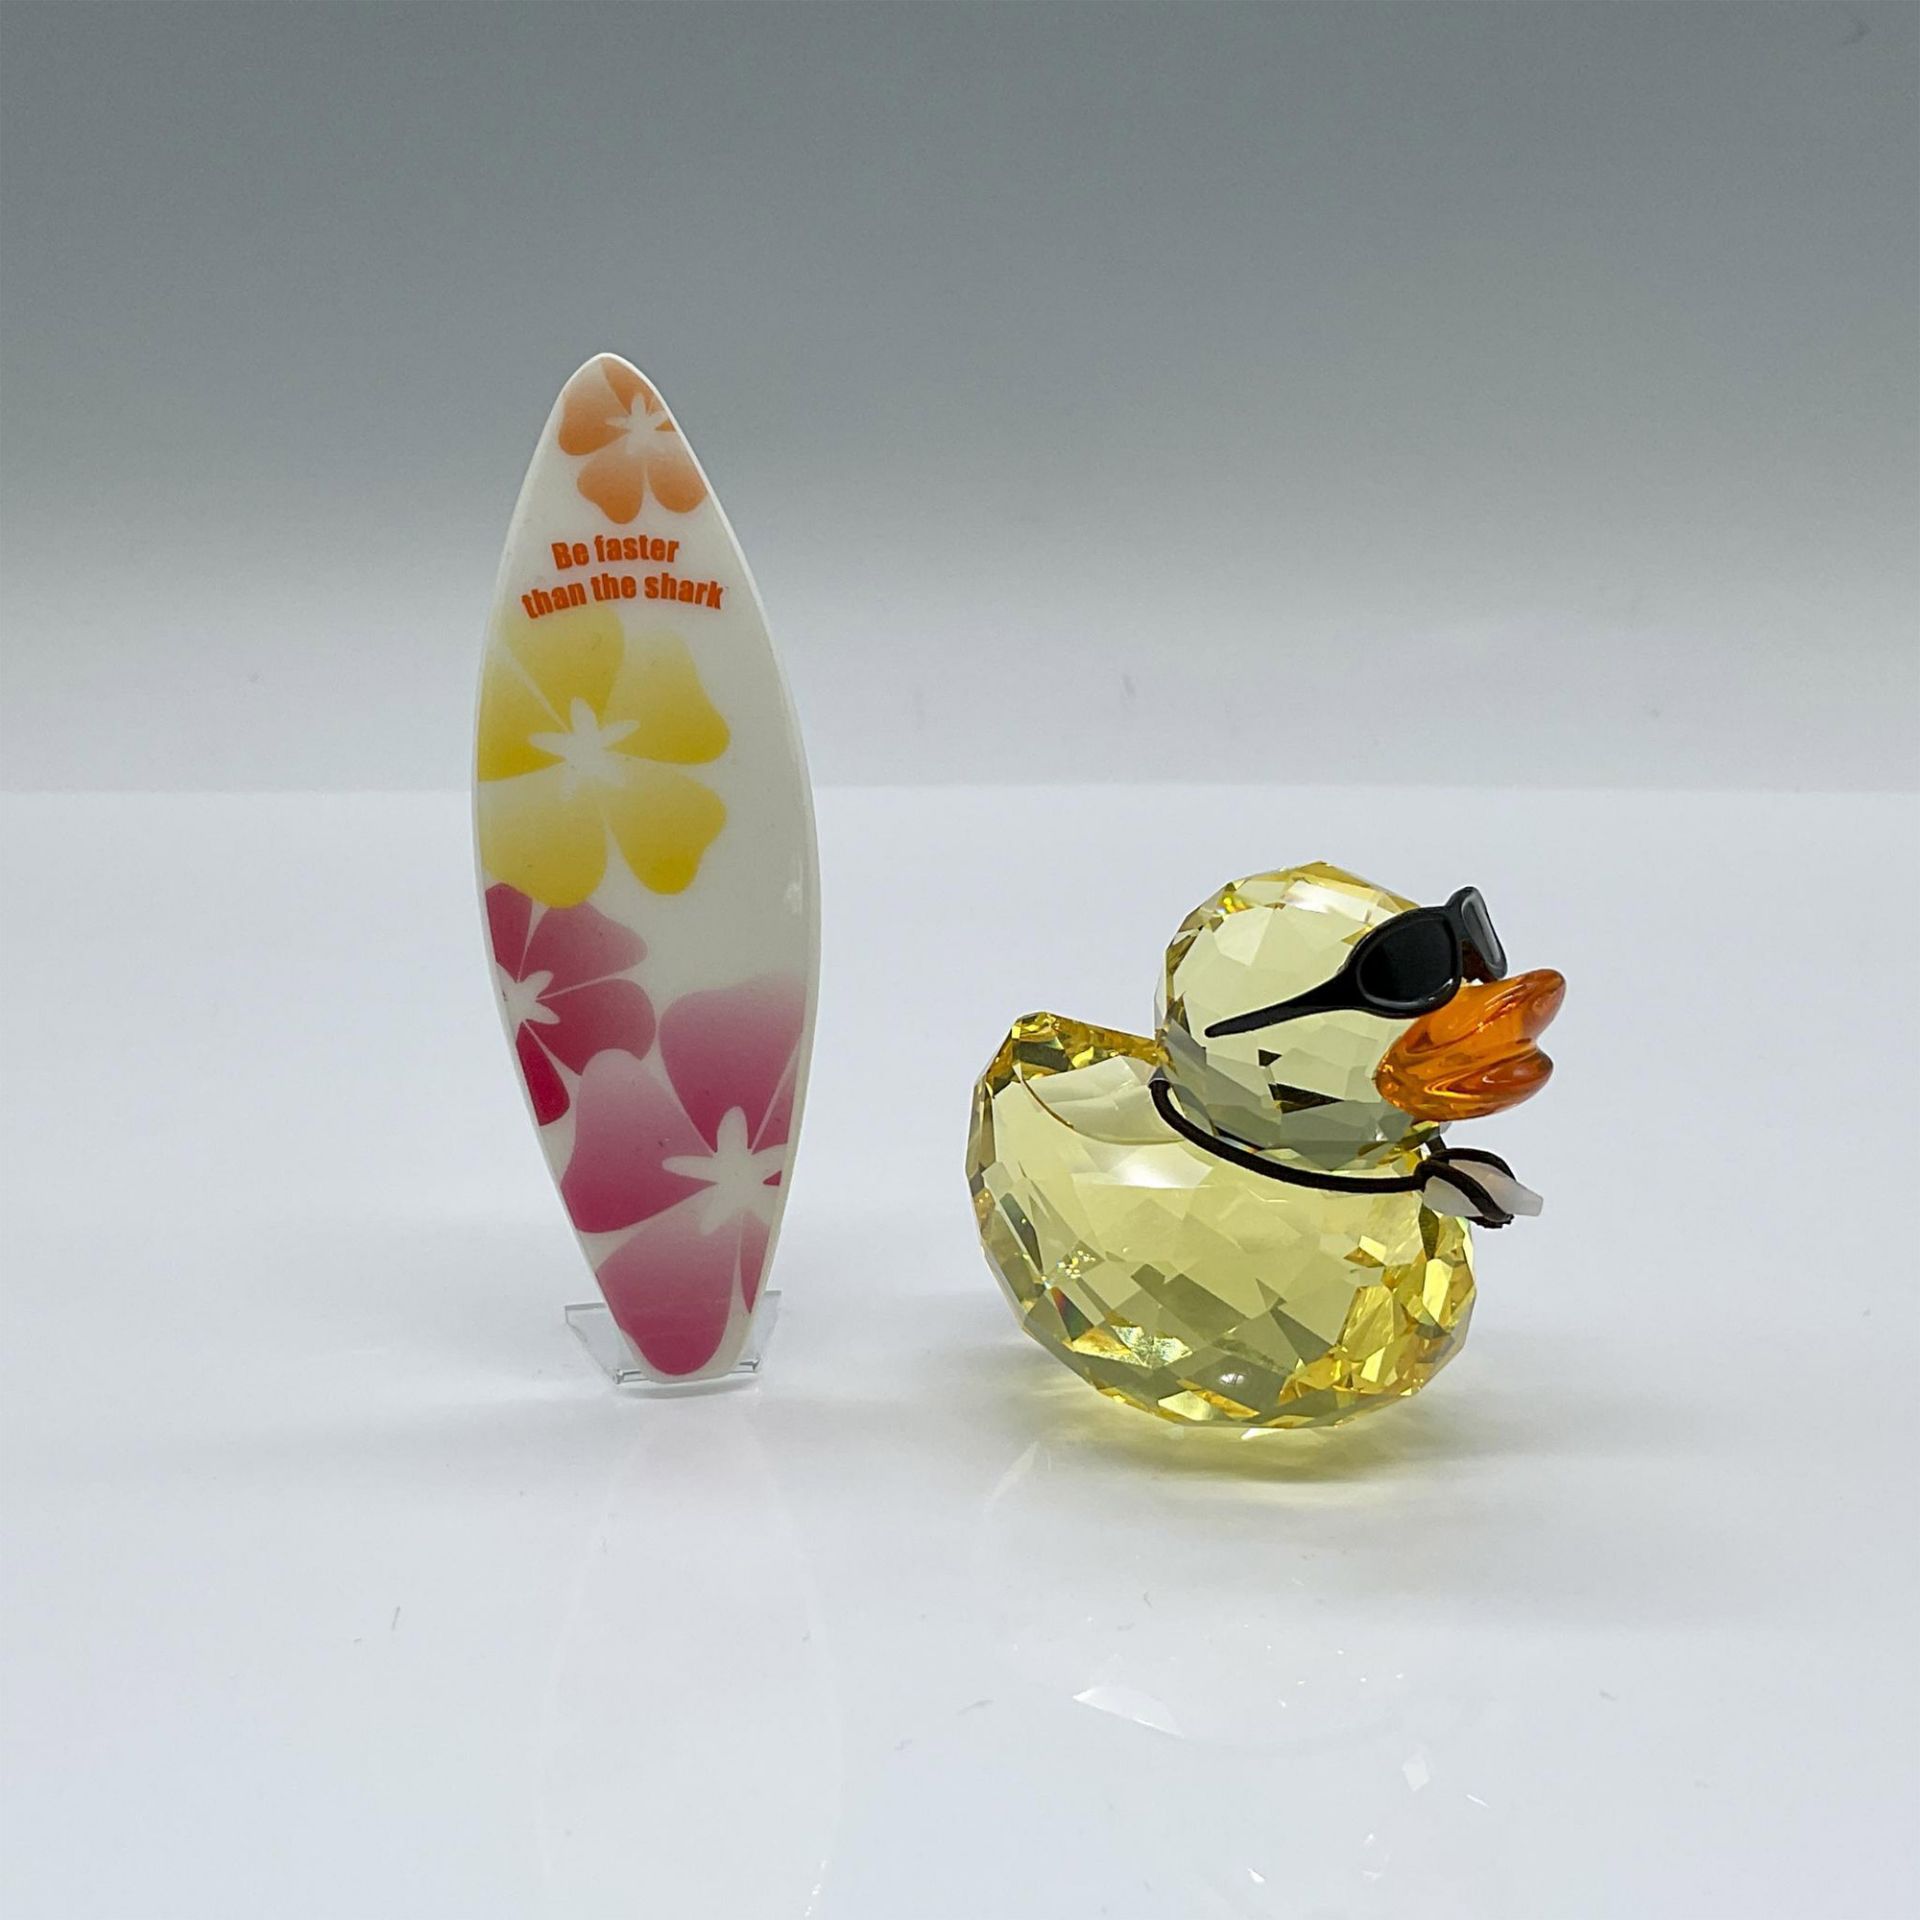 Swarovski Crystal Figurine, Happy Duck - Sunny Steve - Image 2 of 3